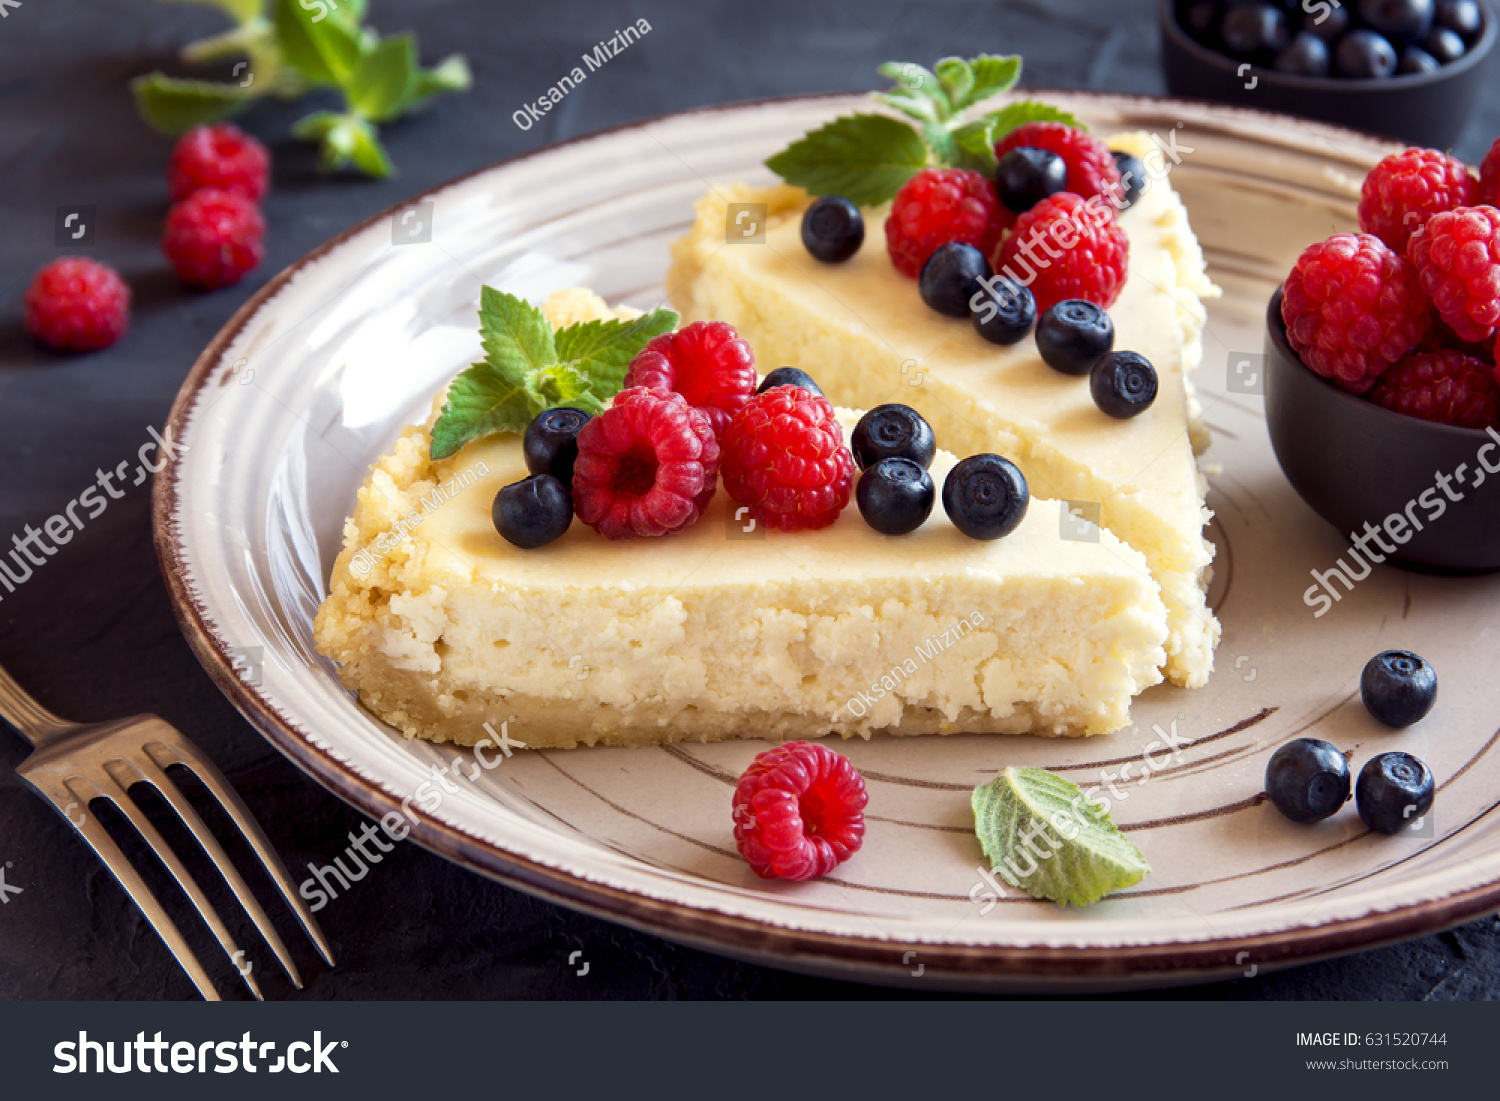 Homemade cheesecake with fresh berries and mint for dessert - healthy organic summer dessert pie cheesecake. Cheese cake. #631520744